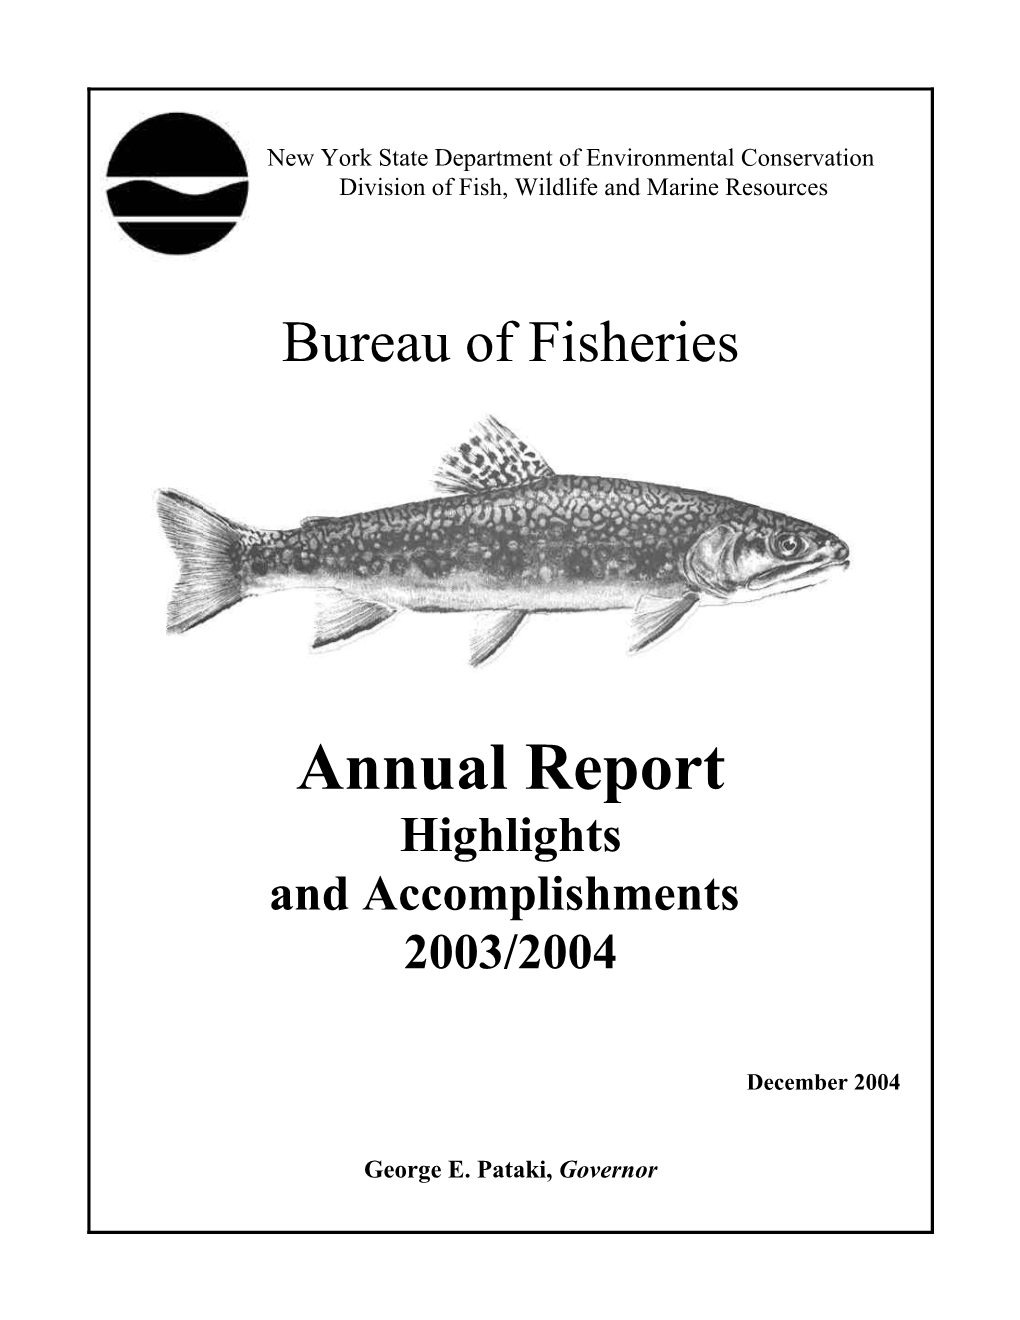 NYSDEC Bureau of Fisheries 2003/2004 Annual Report